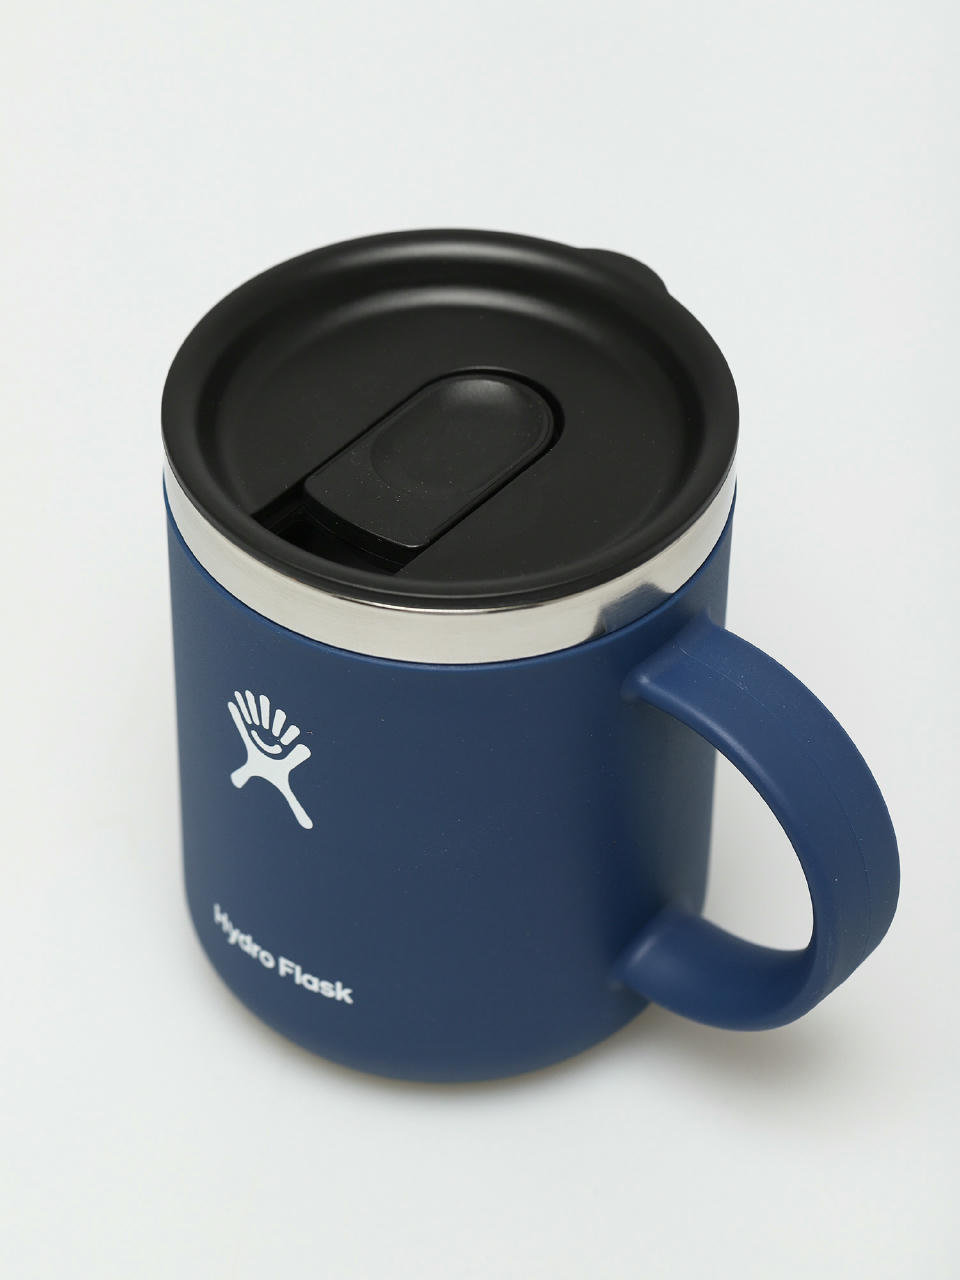 https://static.super-shop.com/1267092-hydro-flask-coffe-mug-354ml-cup-cobalt.jpg?w=960